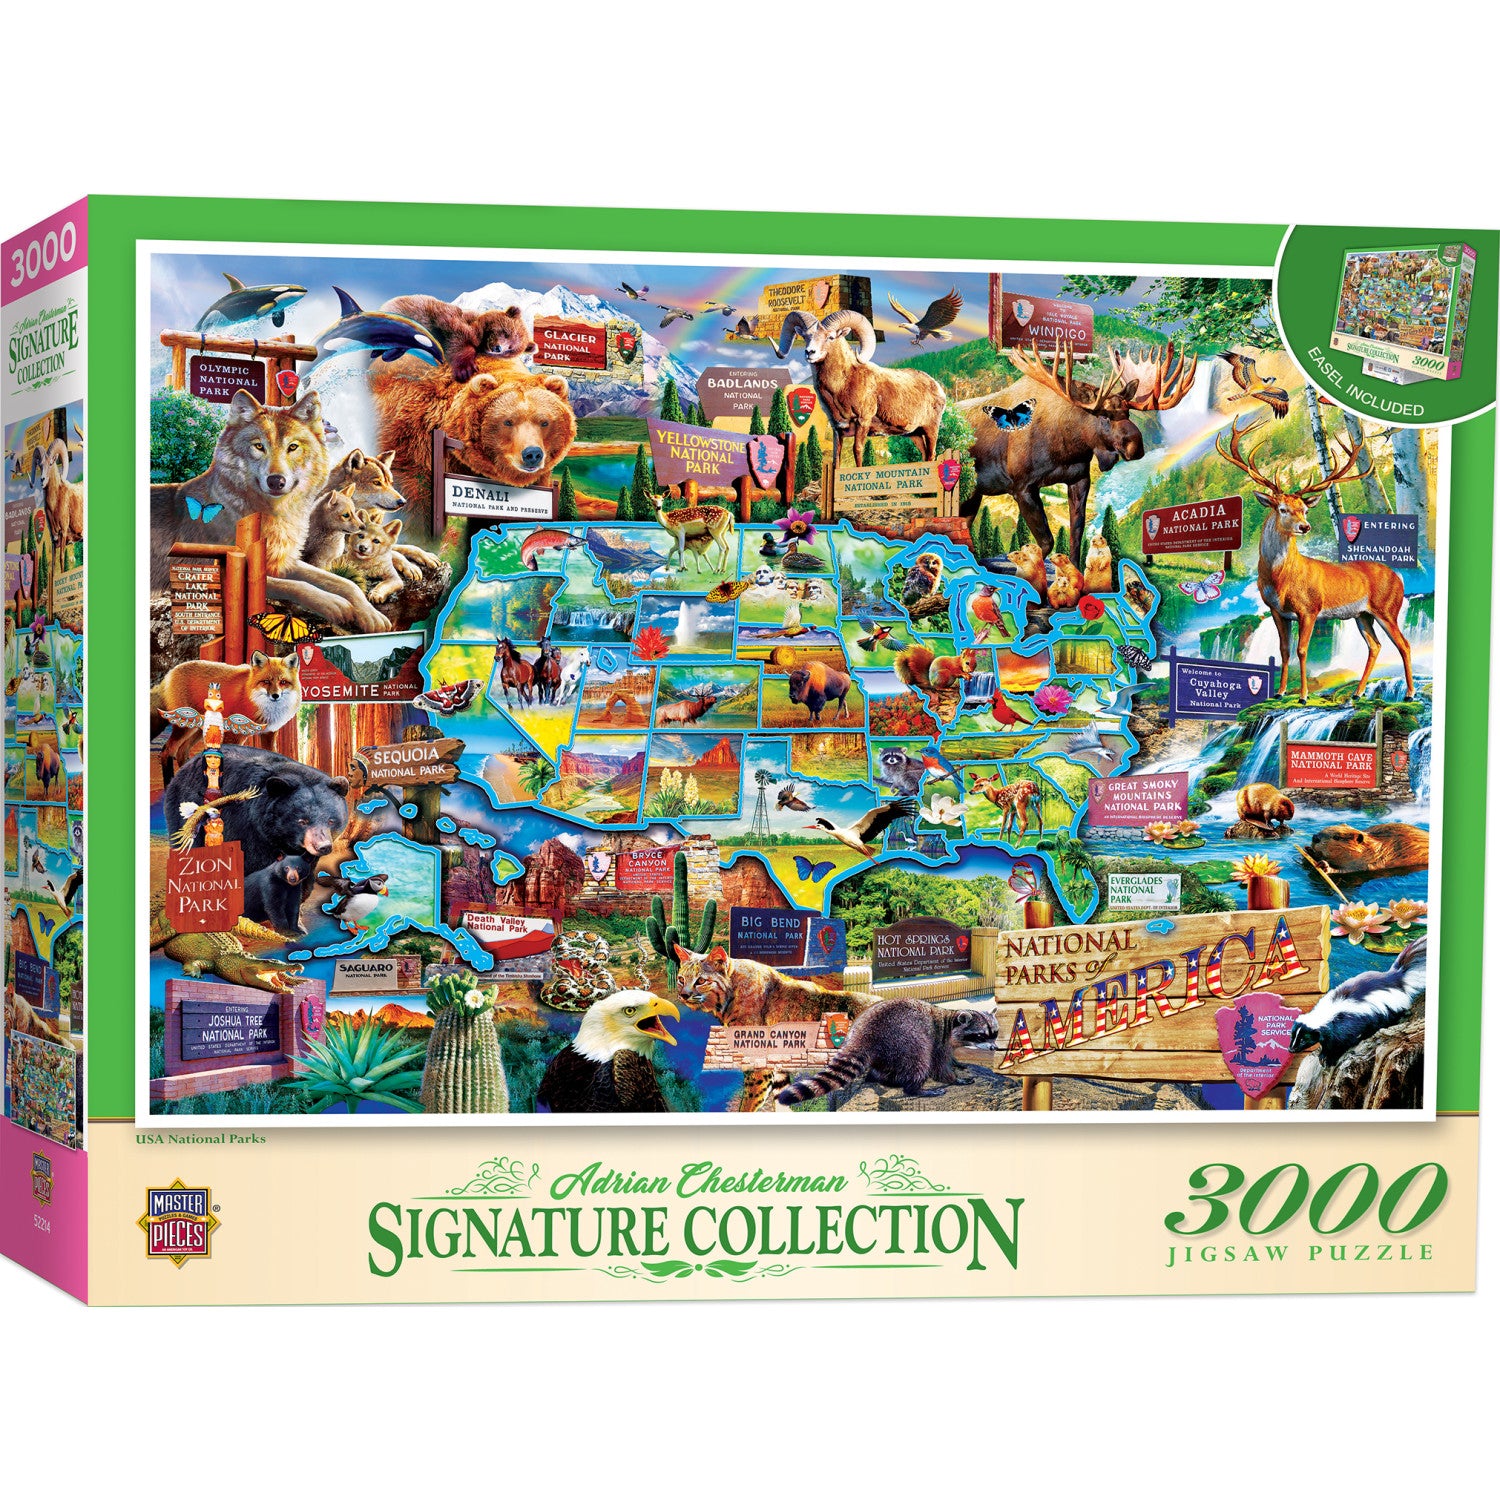 Puzzle The Collection - 3000 pièces -Bluebird-Puzzle-70160